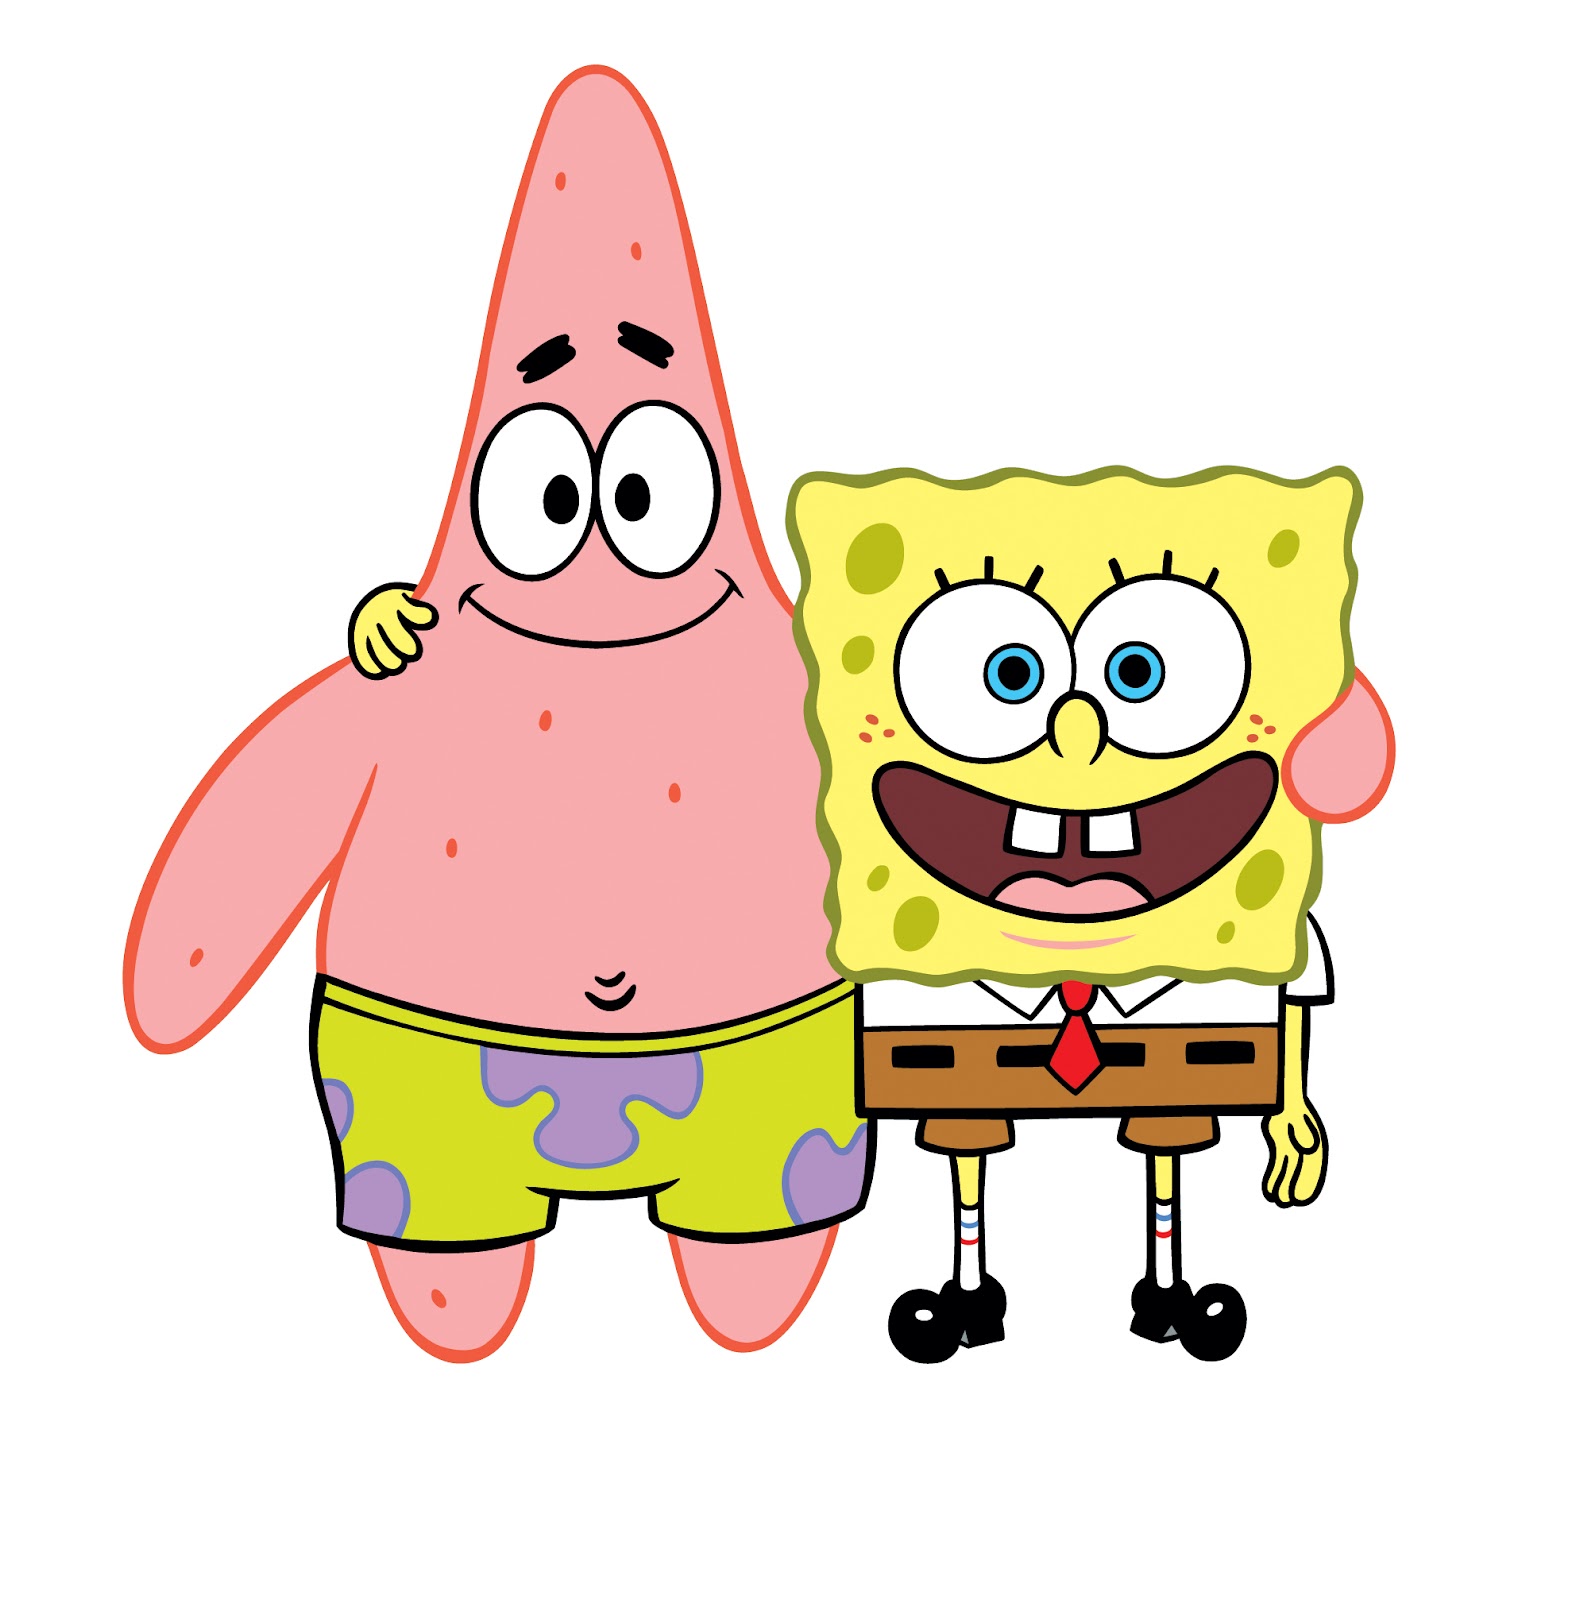 Spongebob-Patrick-spongebob-squarepants-33210740-1984-2014.jpg